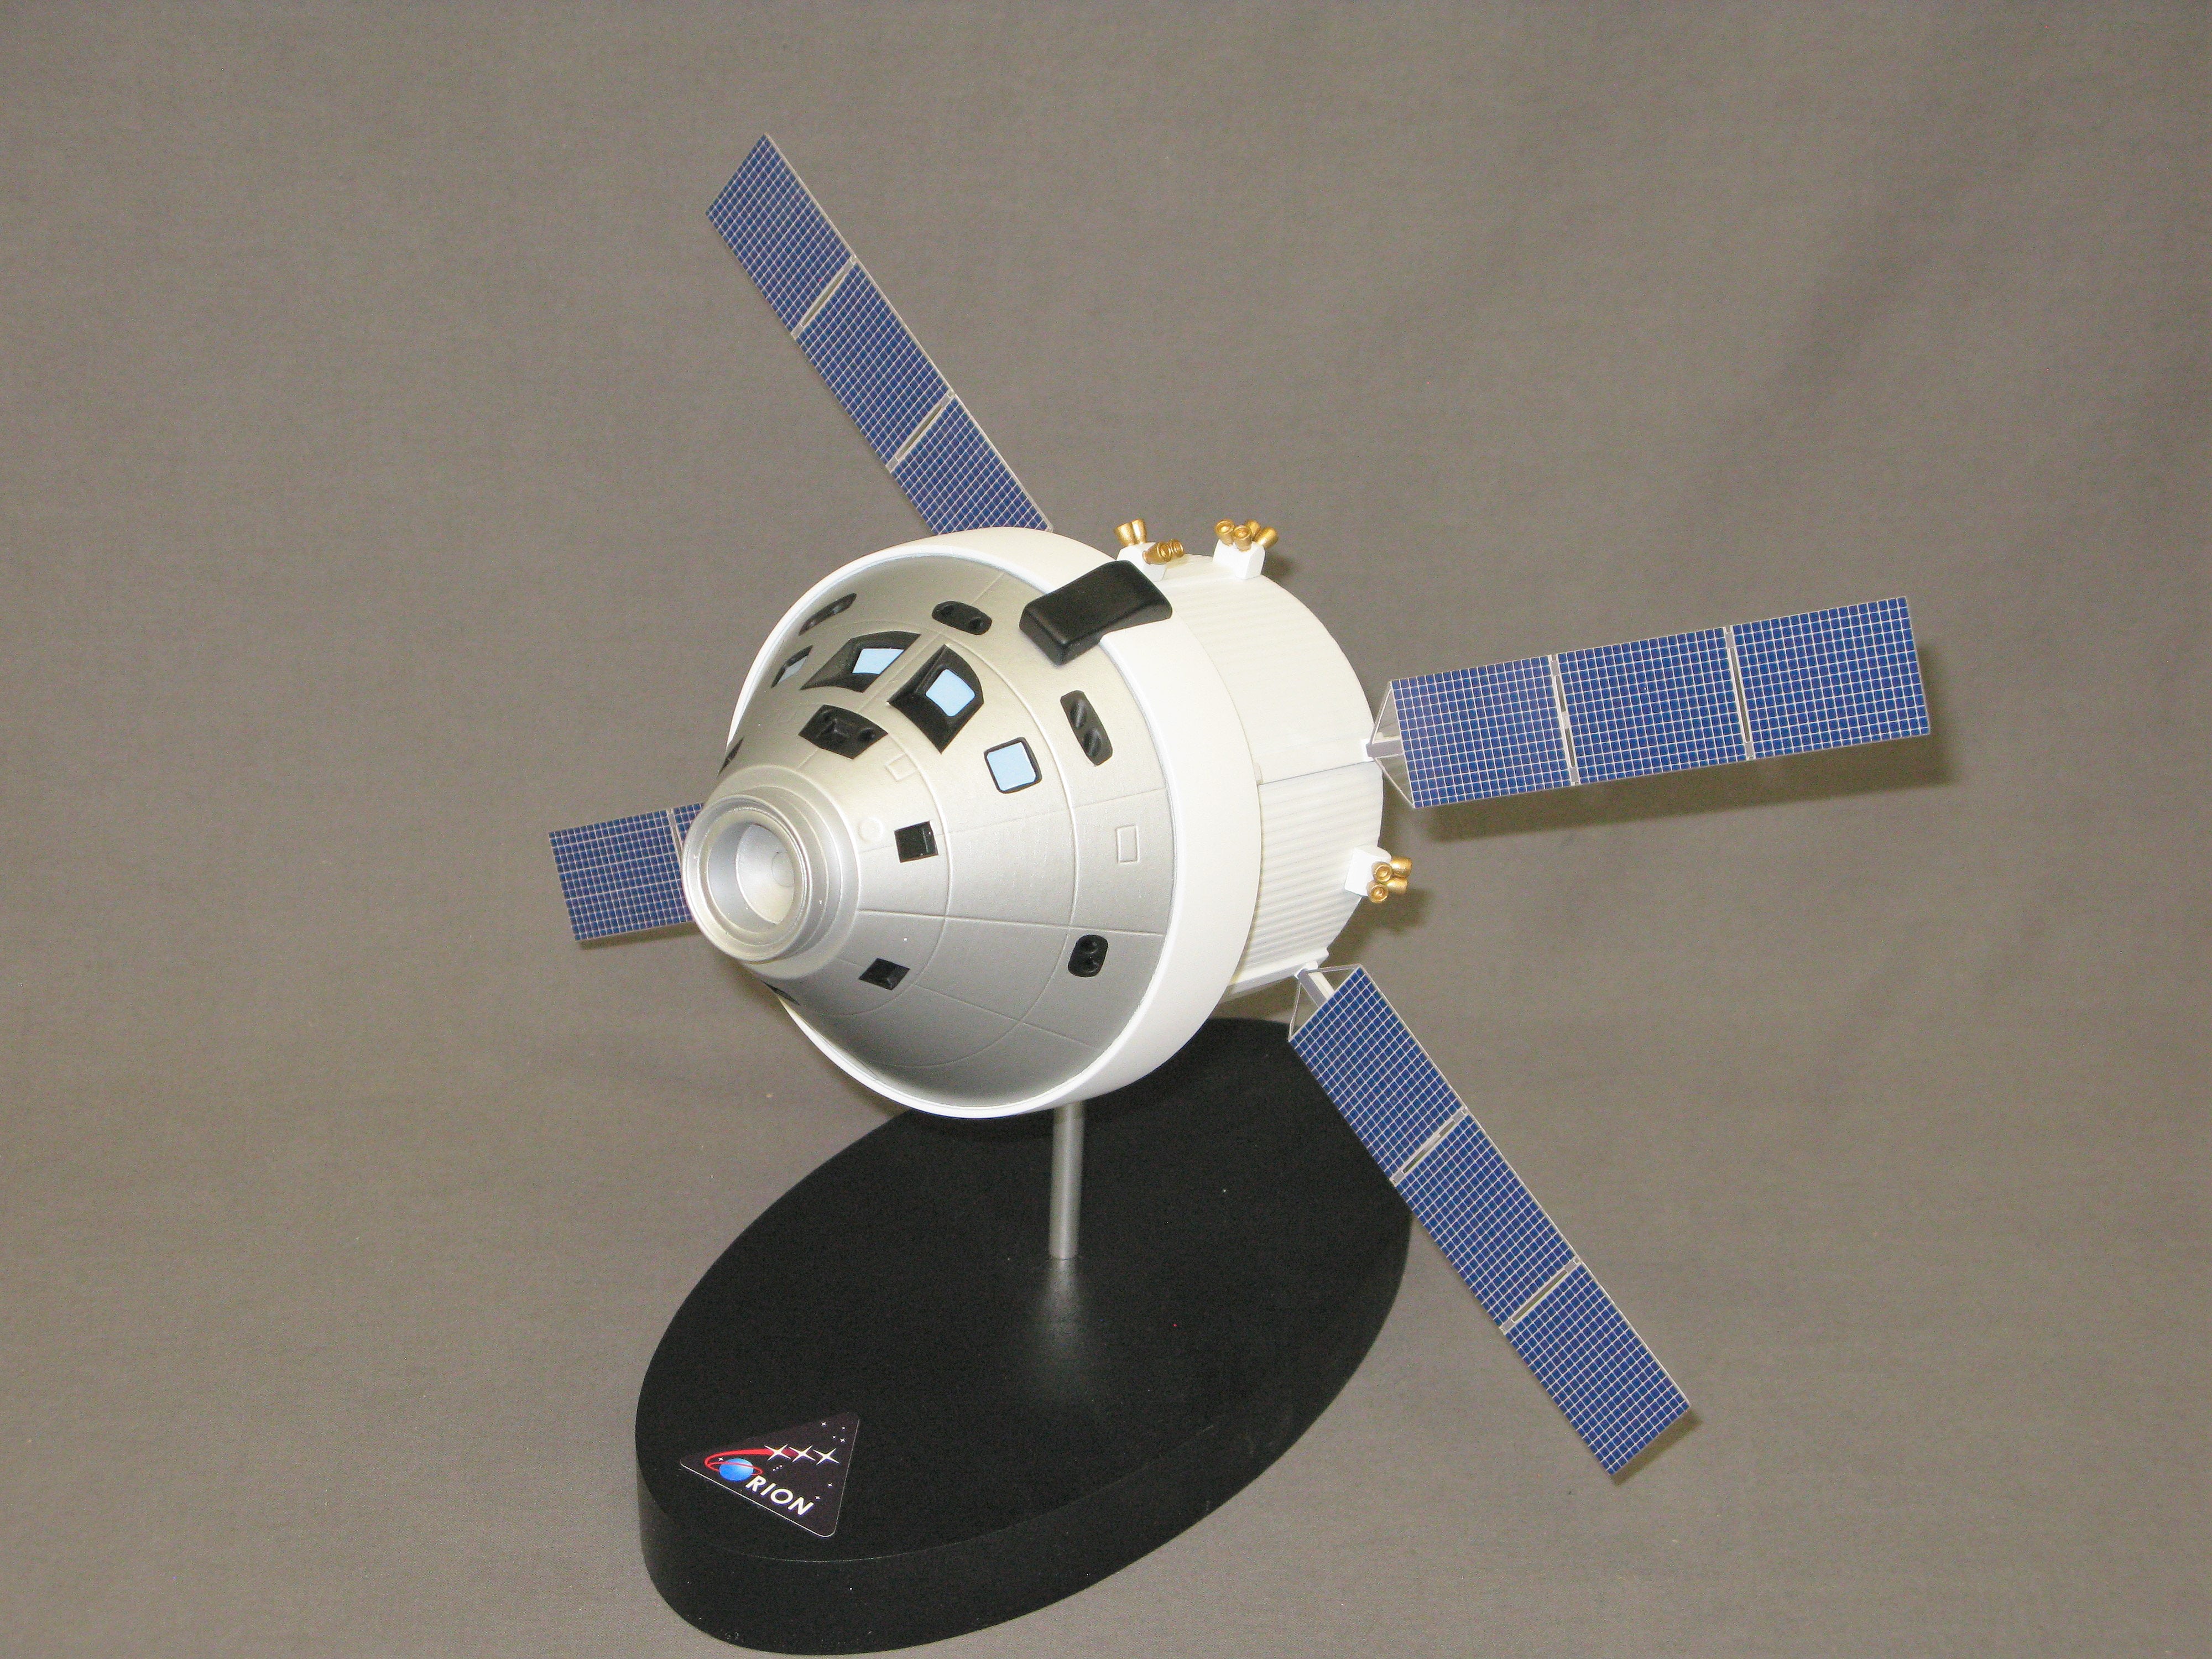 Orion Multi-Purpose Crew Vehicle - The Space Store